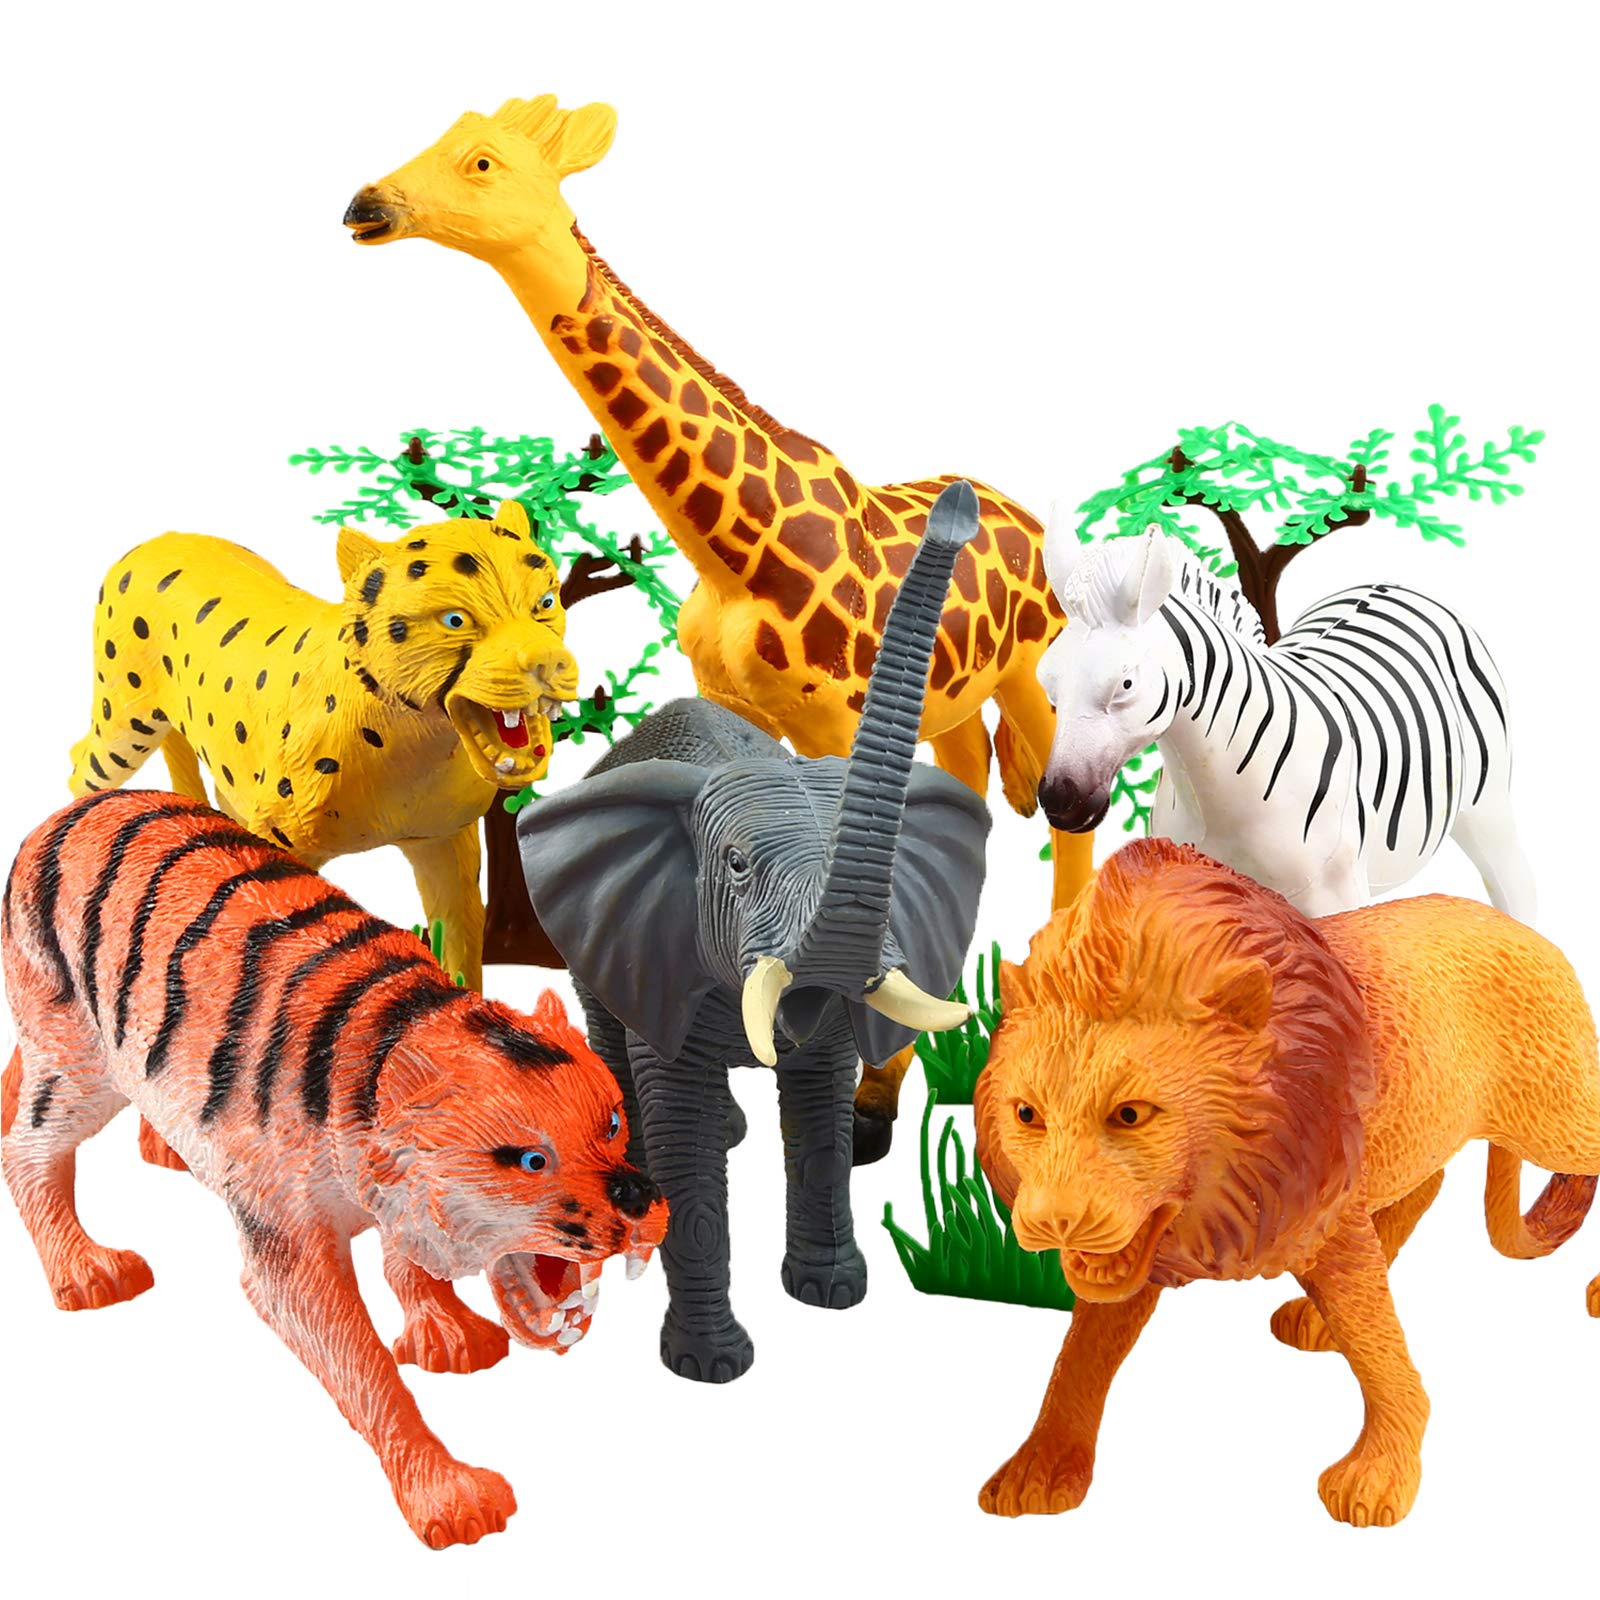 Mua Animal Figure,8 Inch Jumbo Jungle Animal Toy Set(12 Piece),Yeonha Toys  Realistic Wild Vinyl Animal For Kids Toddler Child,Plastic Animal Party  Favors Learning Forest Farm Animals Toys Playset trên Amazon Mỹ chính